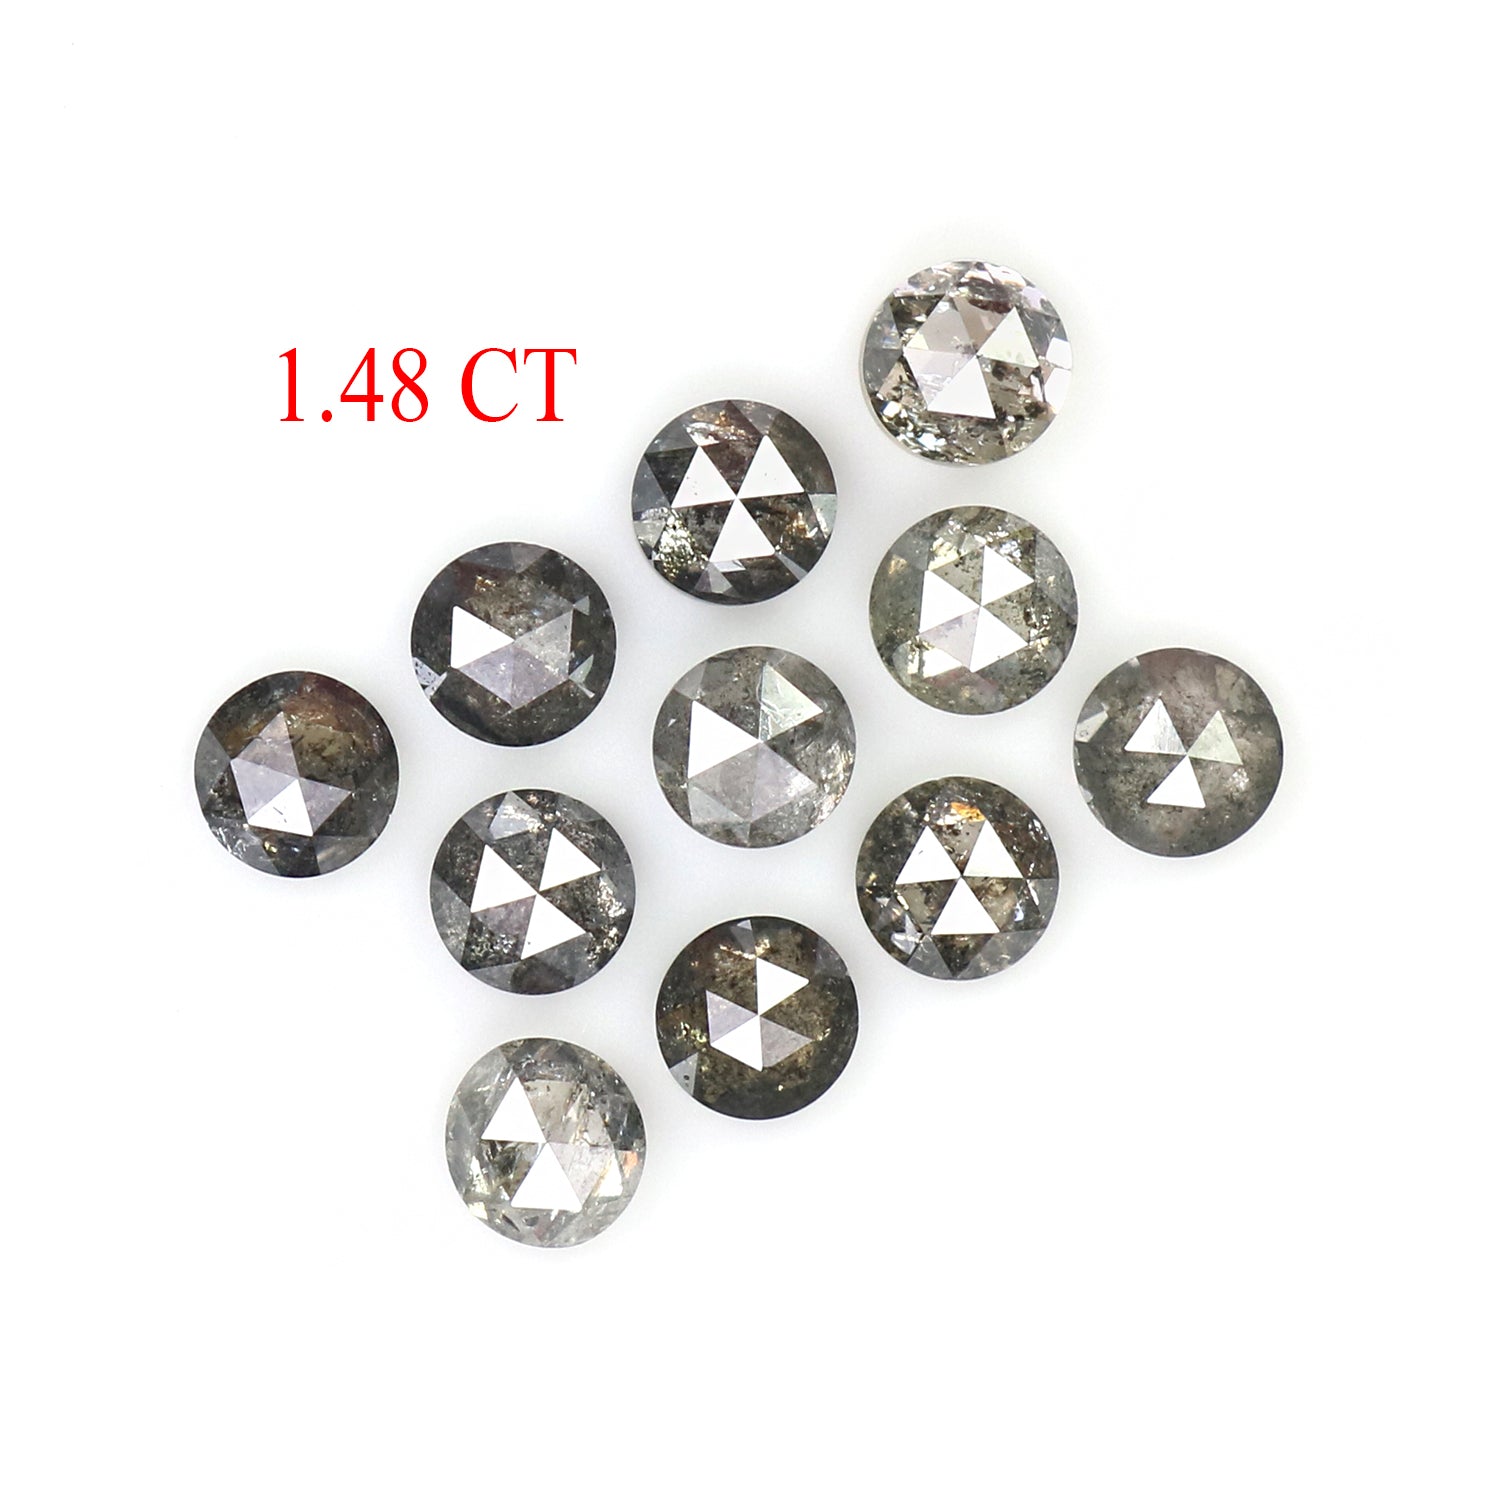 Natural Loose Round Cut Diamond, Salt And Pepper Round Diamond, Natural Loose Diamond, Round Rose Cut Diamond, 1.48 CT Round Shape L2825